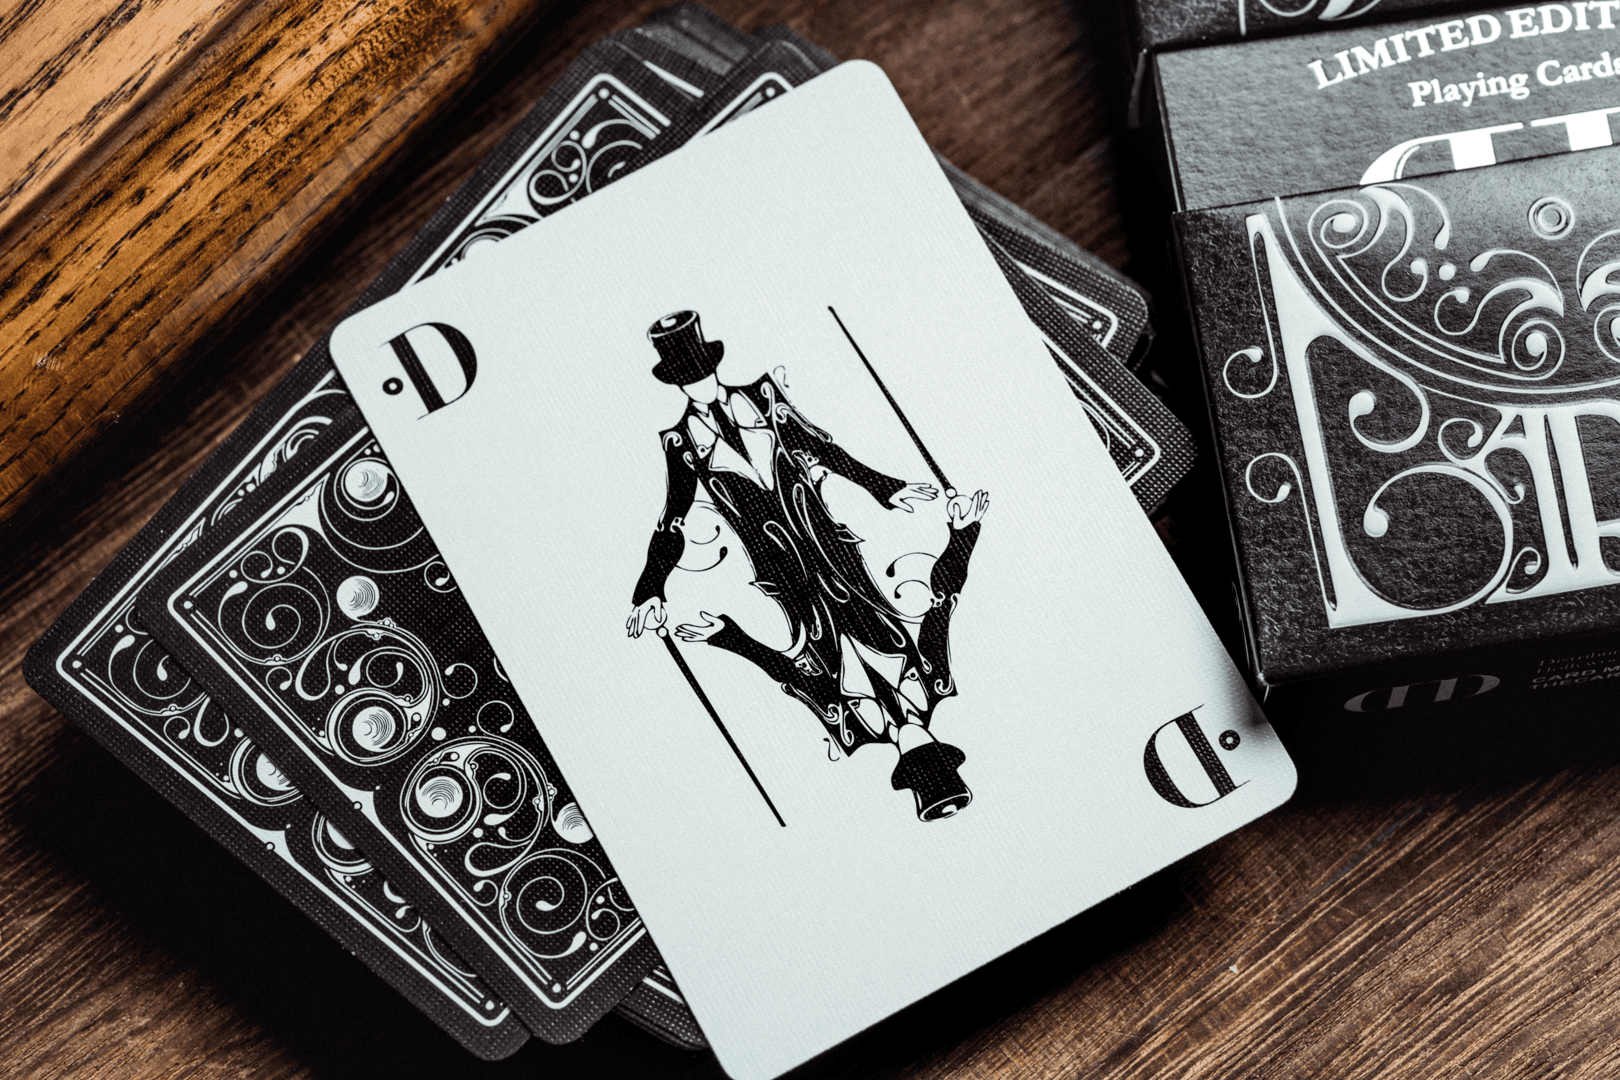 Smoke & Mirrors Playing Cards by Dan & Dave – RarePlayingCards.com